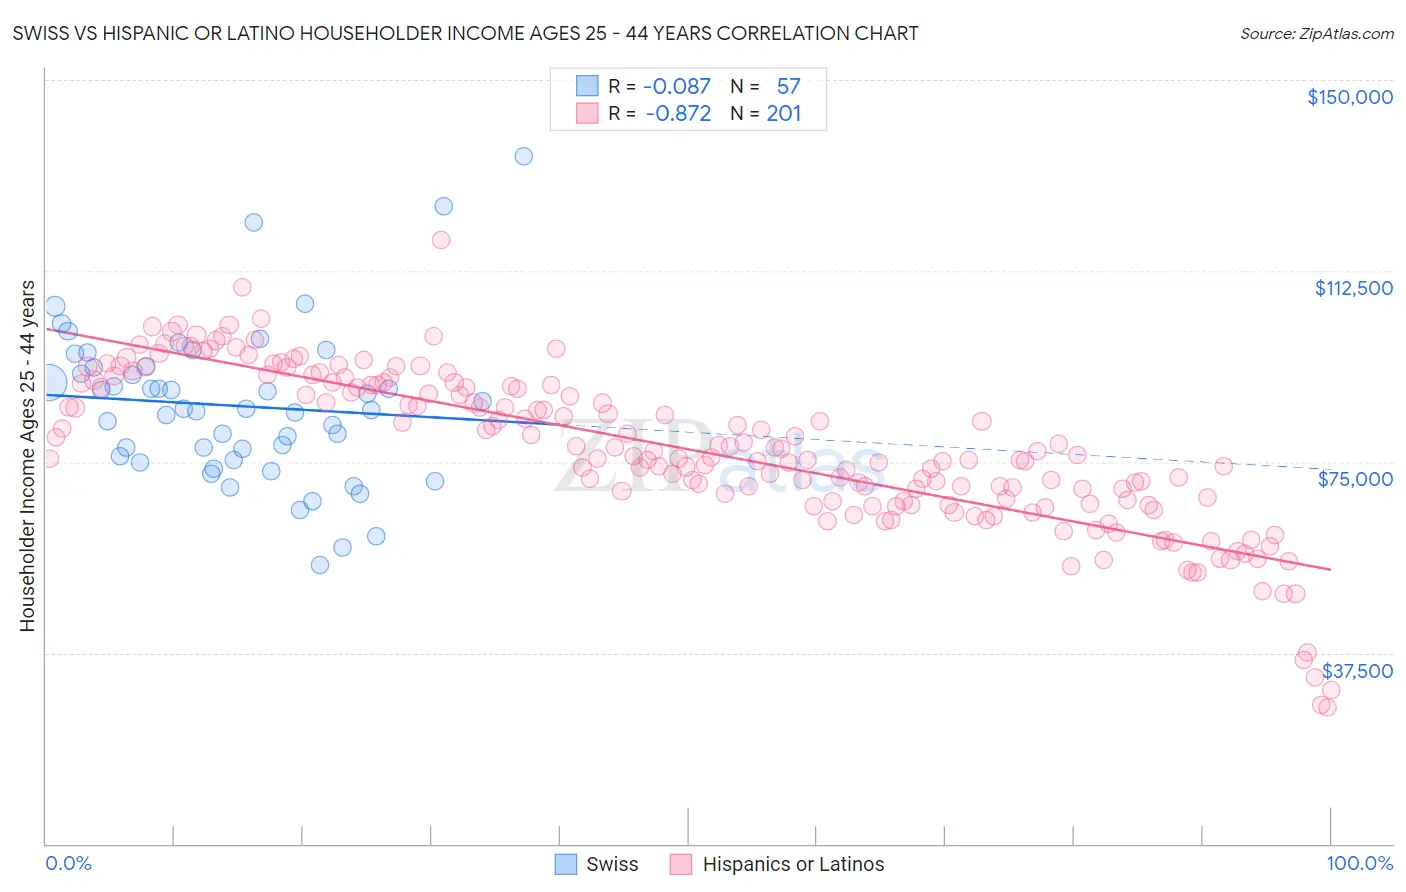 Swiss vs Hispanic or Latino Householder Income Ages 25 - 44 years